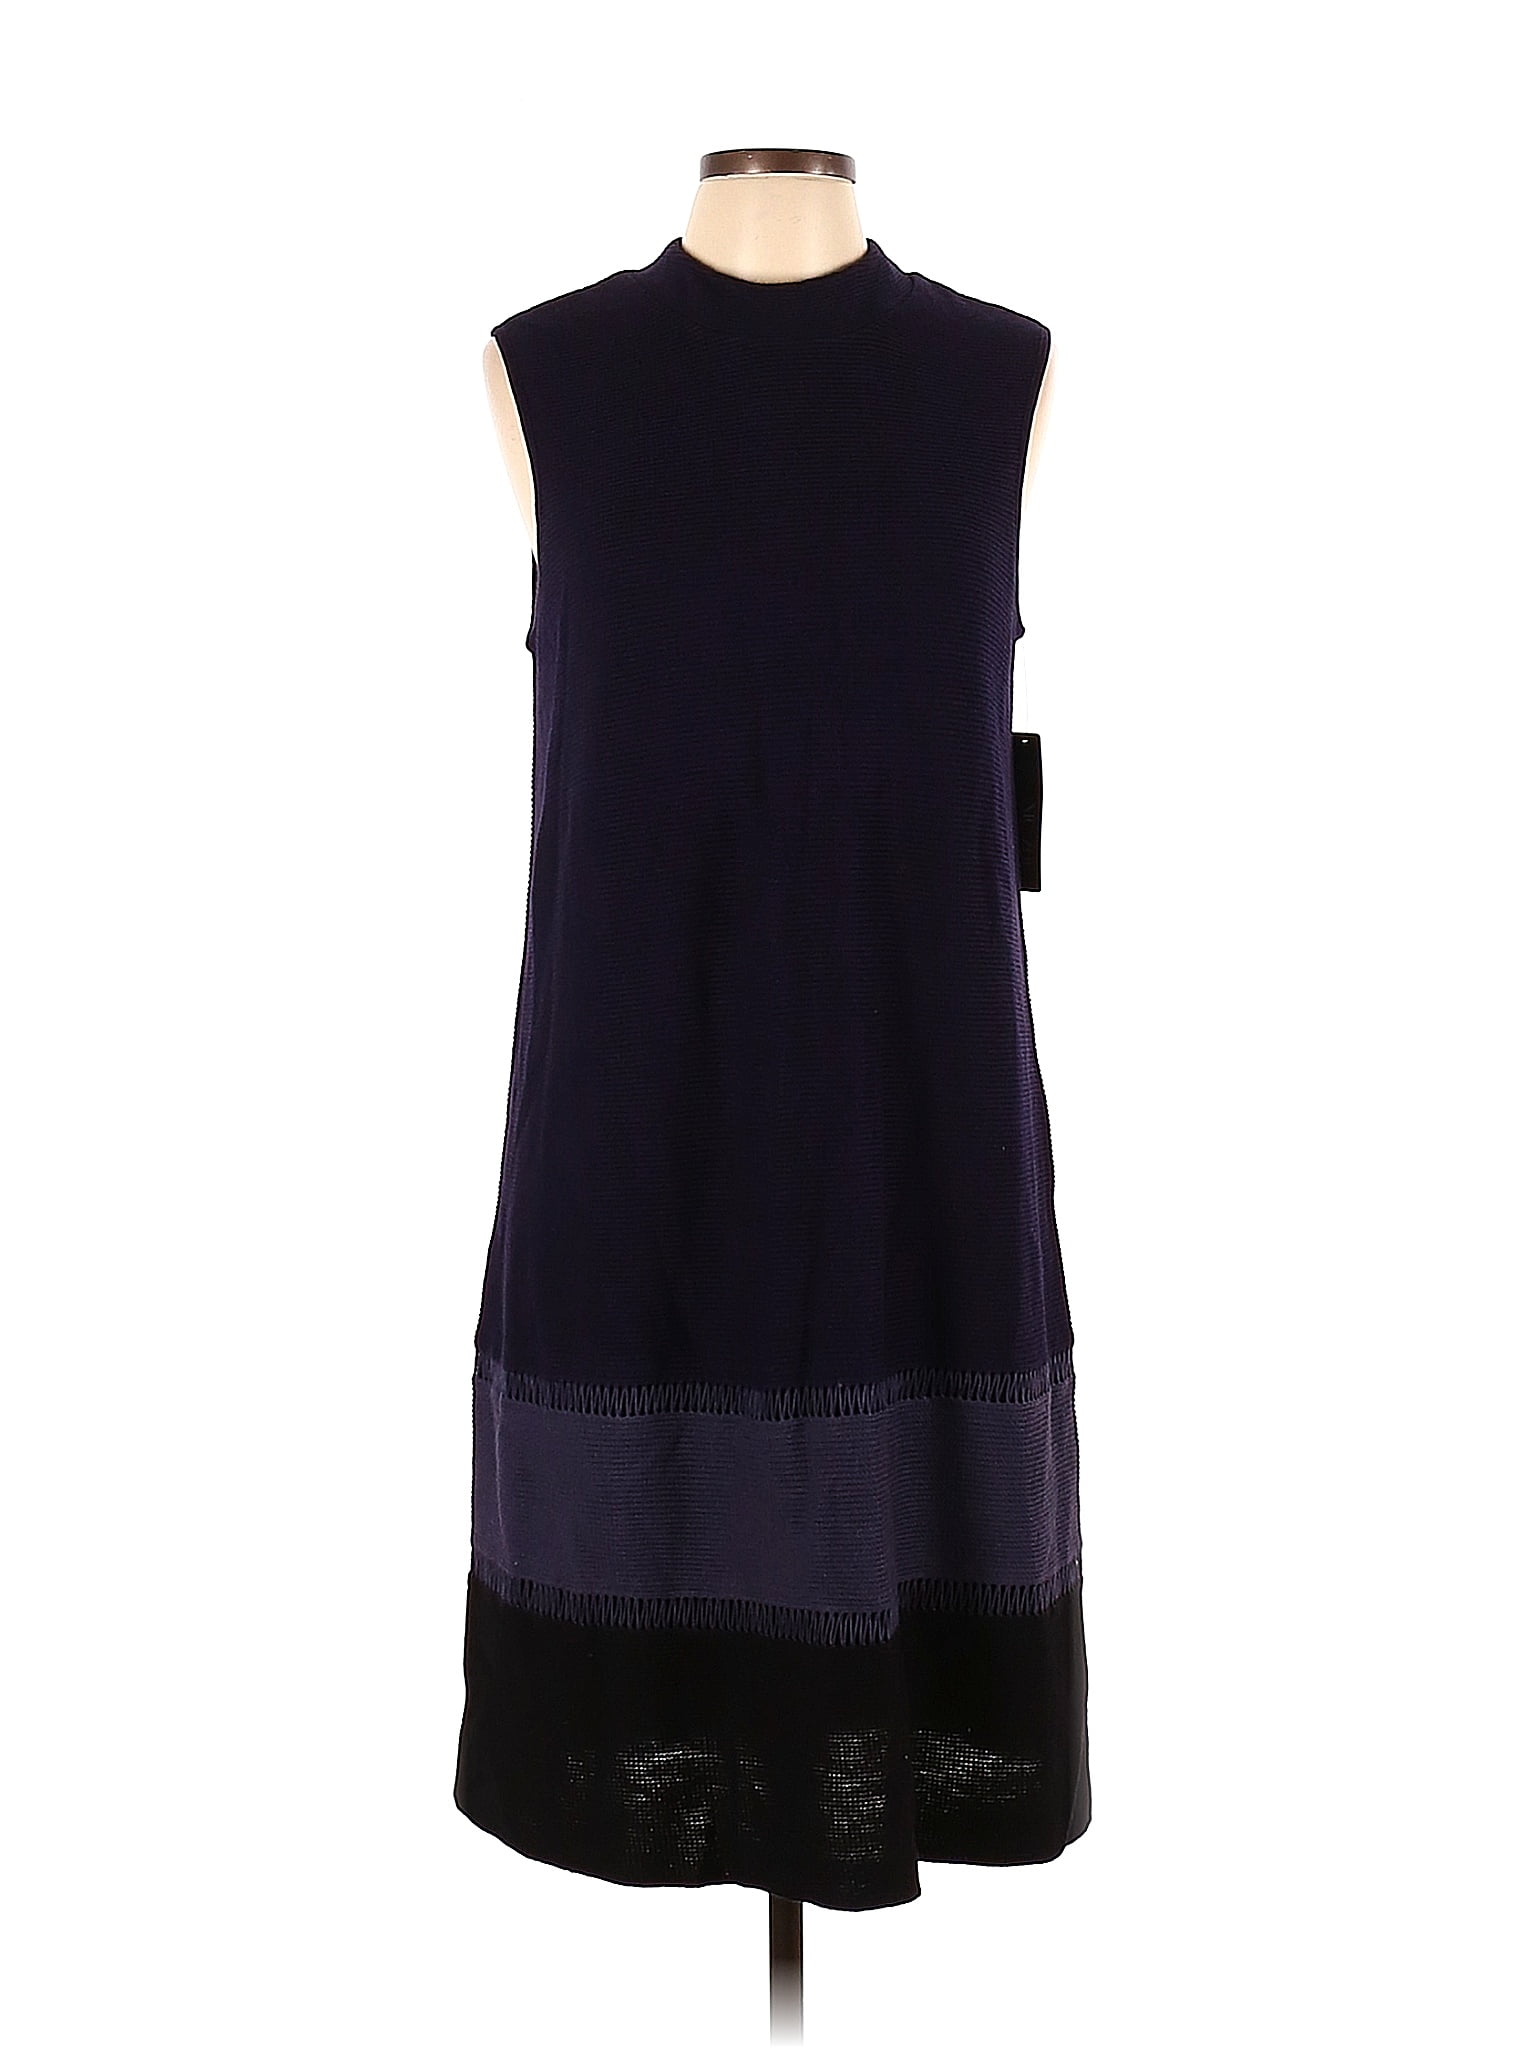 Nic + Zoe Purple Casual Dress Size L - 76% off | thredUP